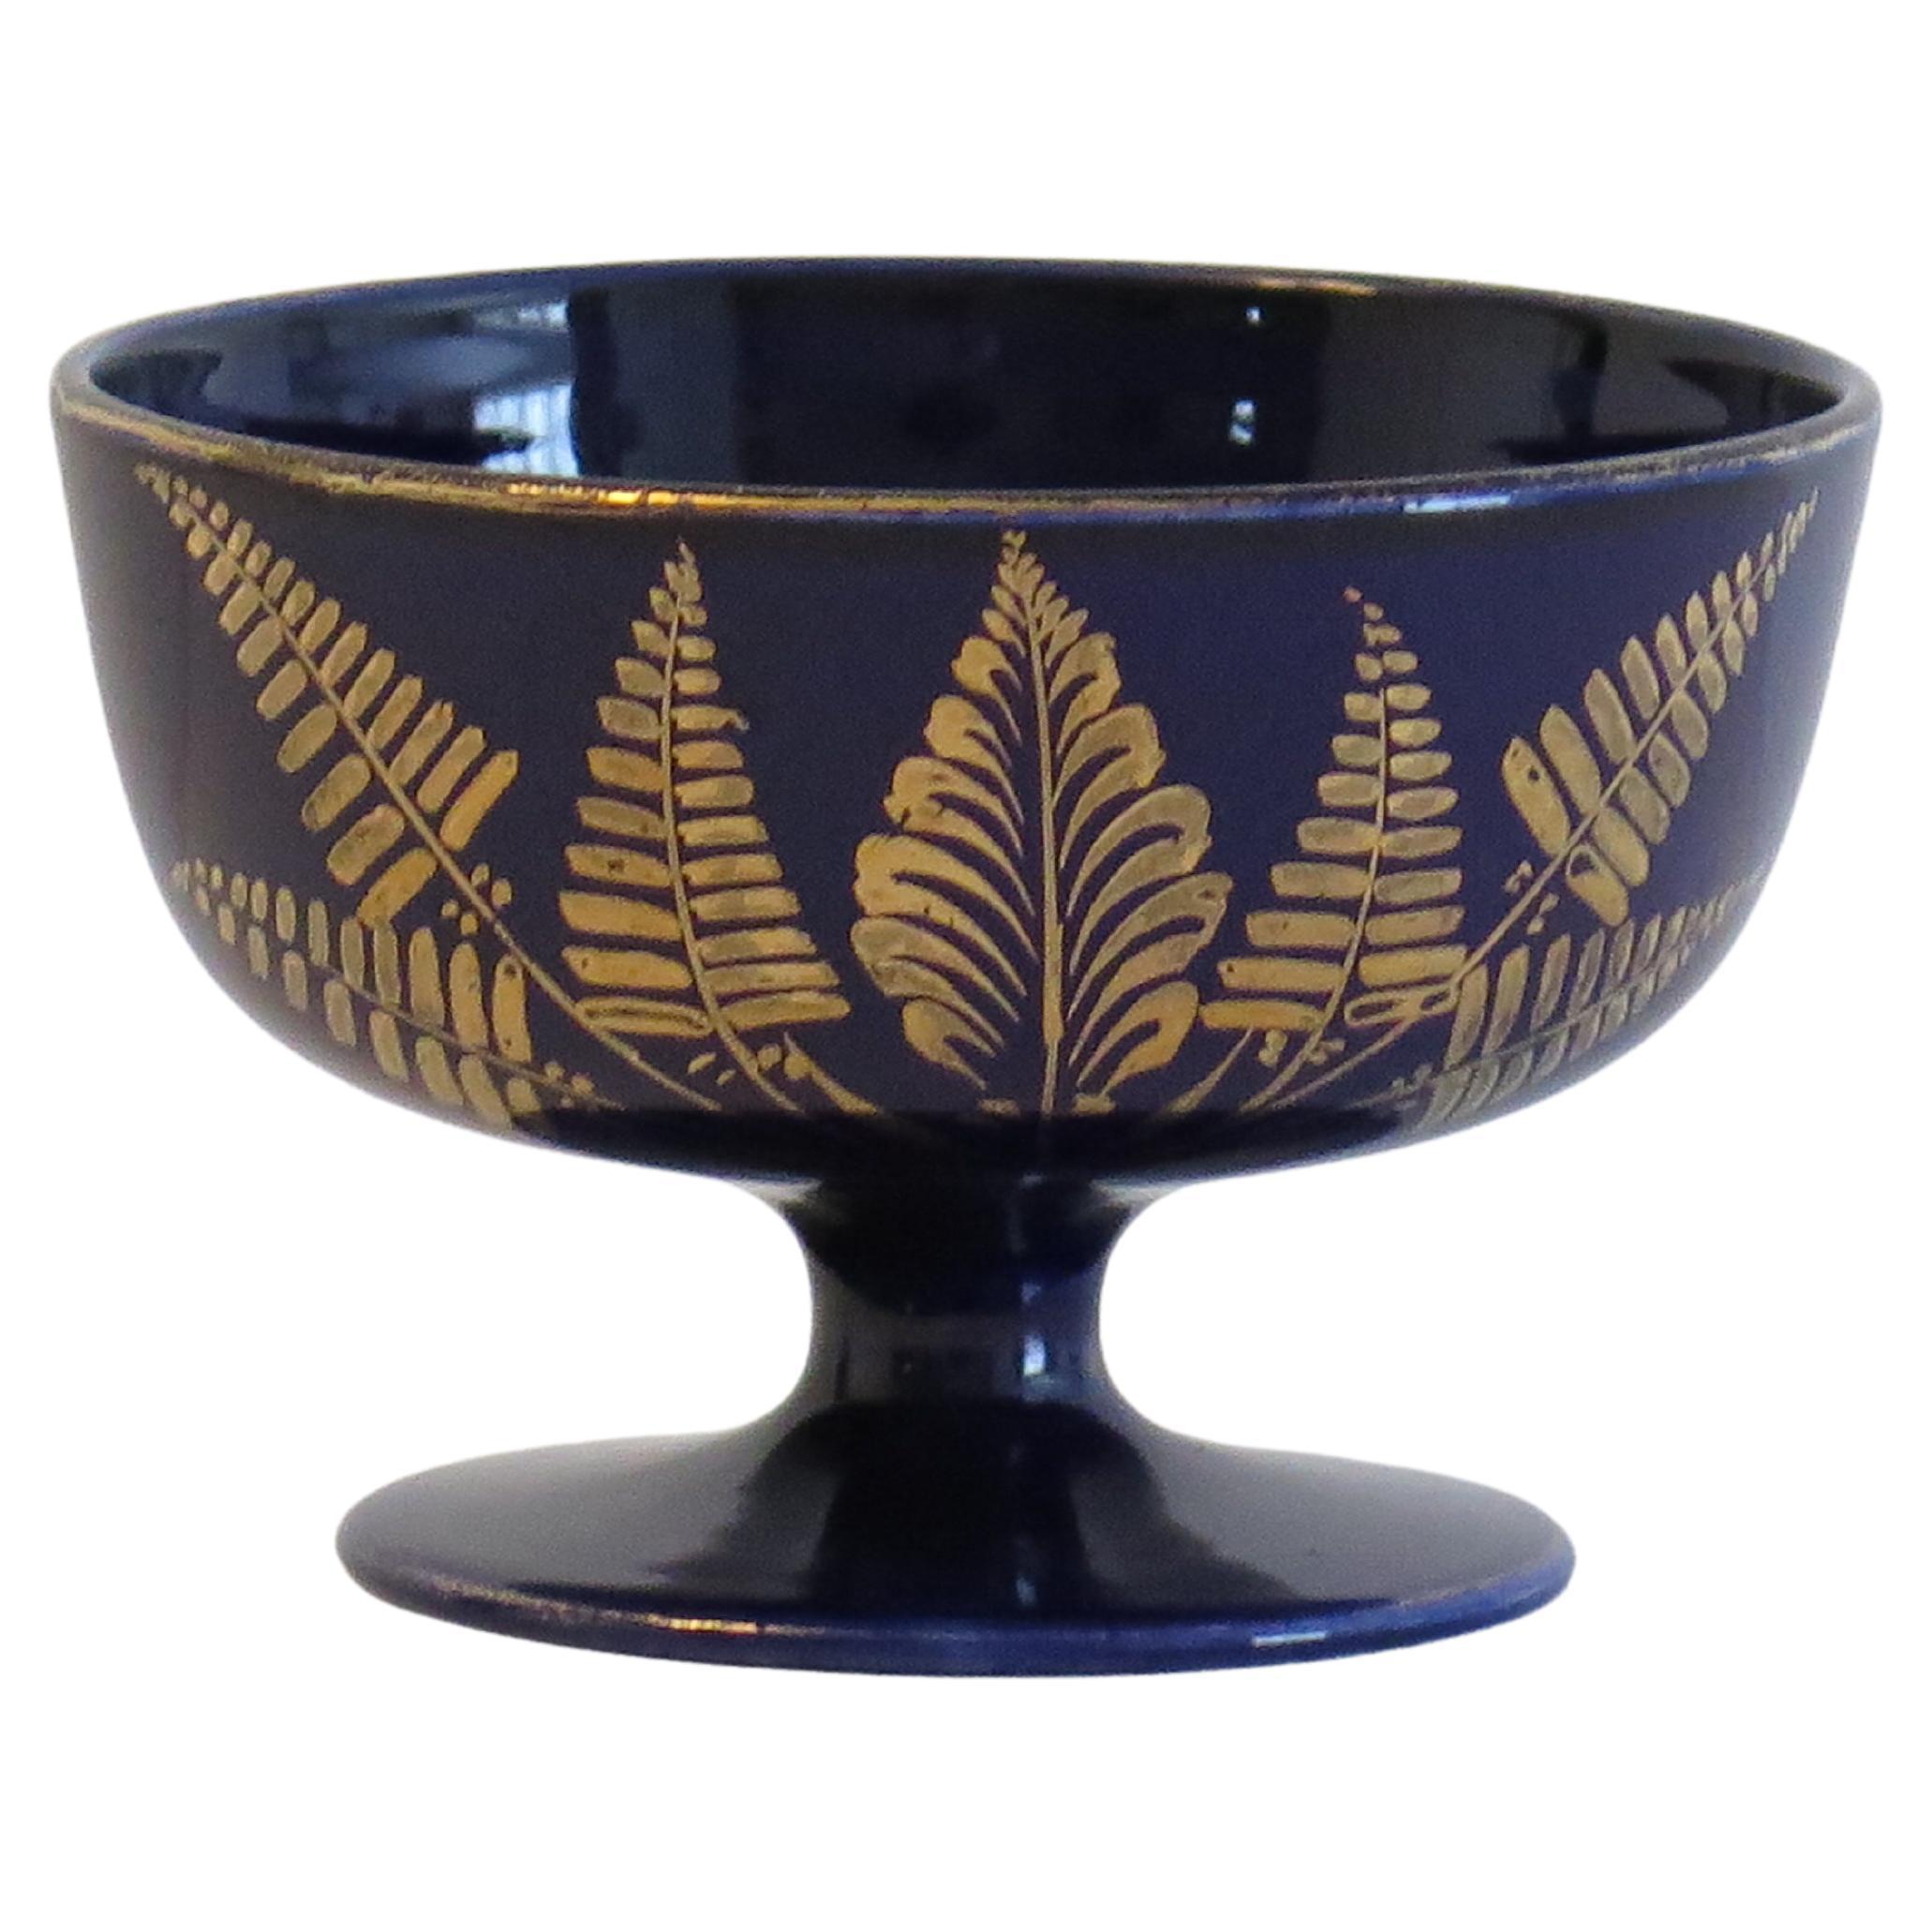 Masons Ironstone Pedestal Bowl in gilded fern Pattern, Georgian period Ca 1818 For Sale